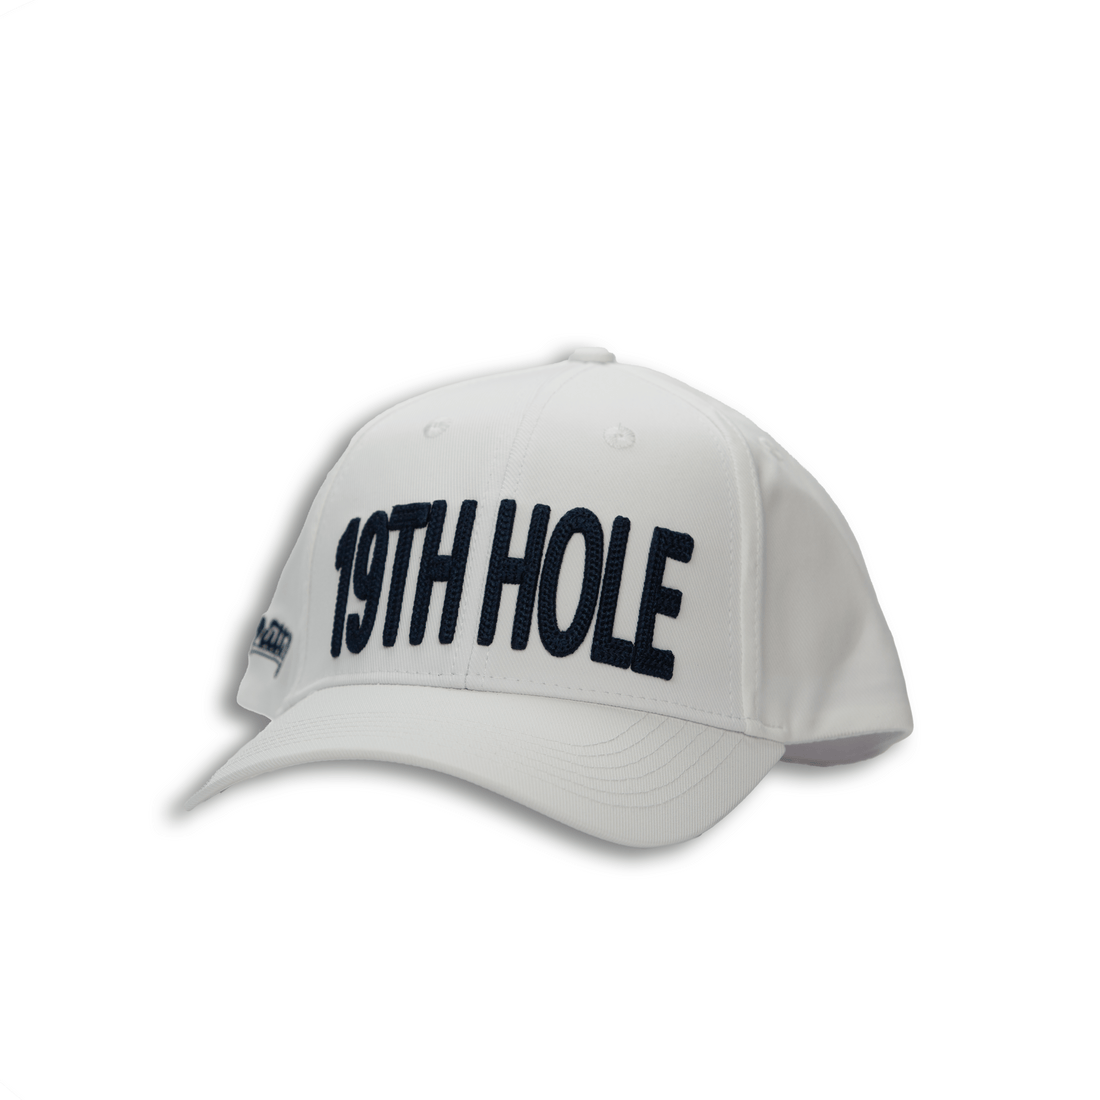 19TH HOLE Hat - 2putt